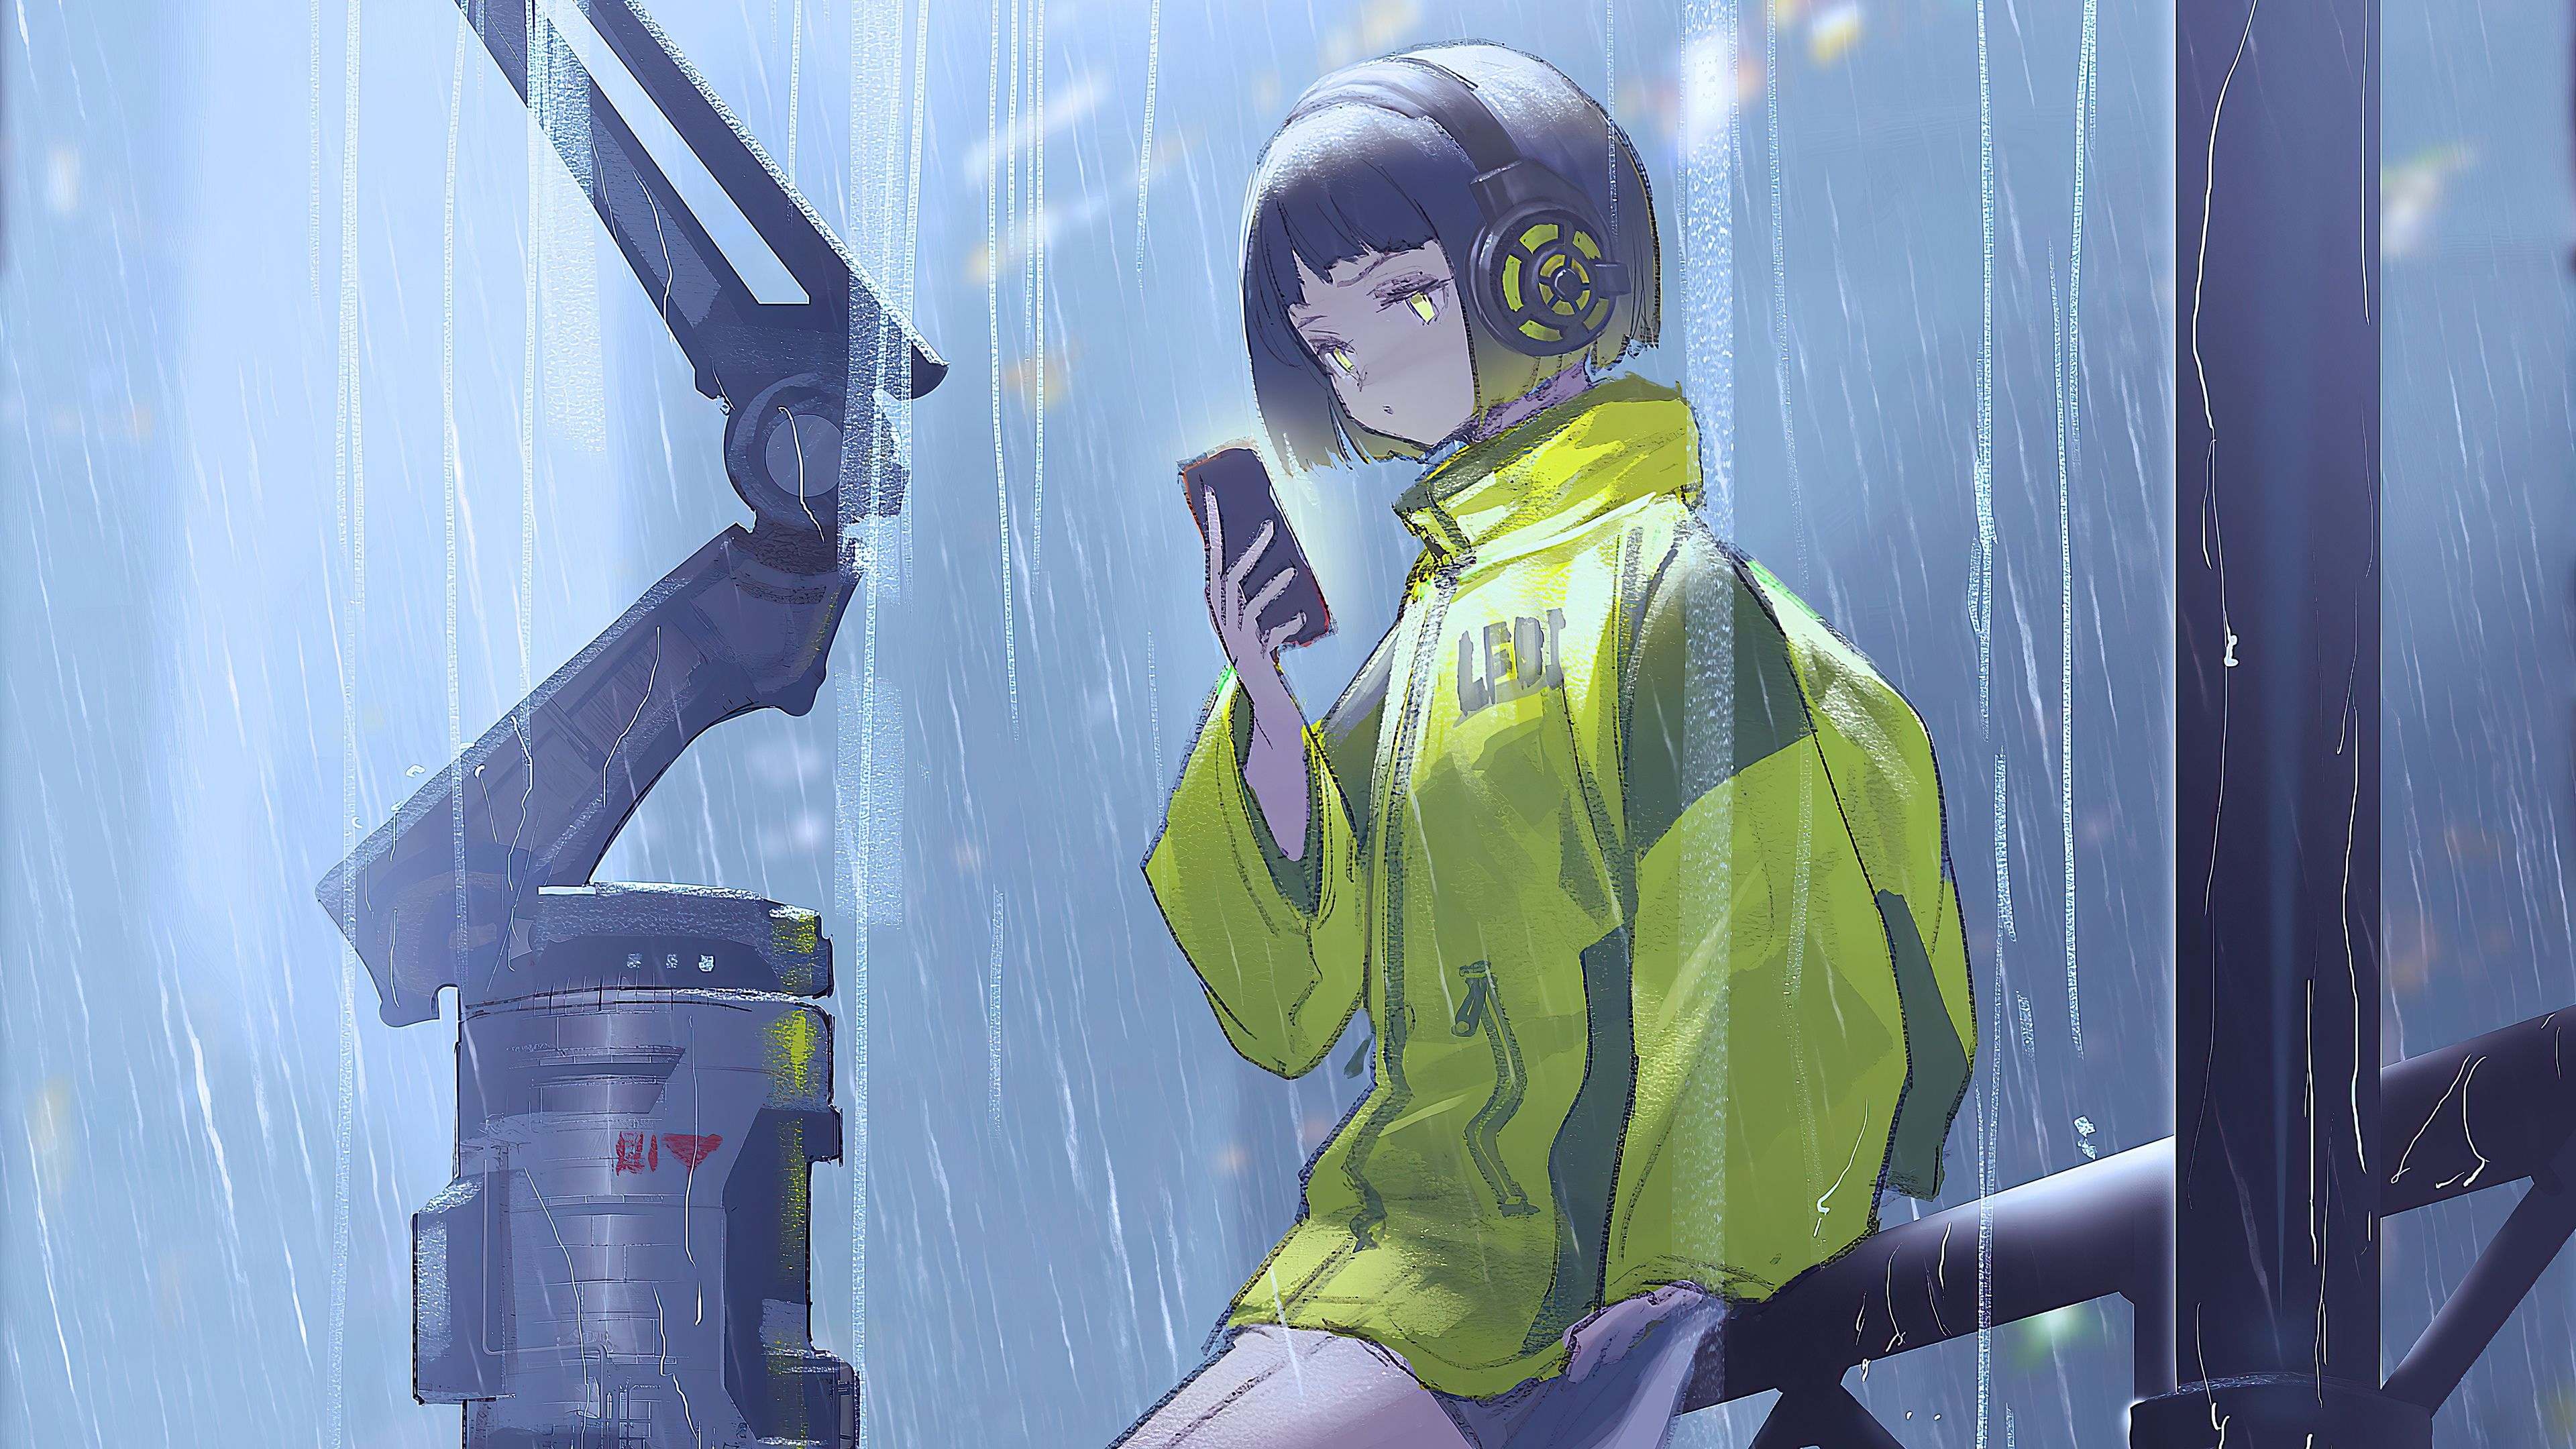 Anime Girl Holding a Umbrella in Rainy